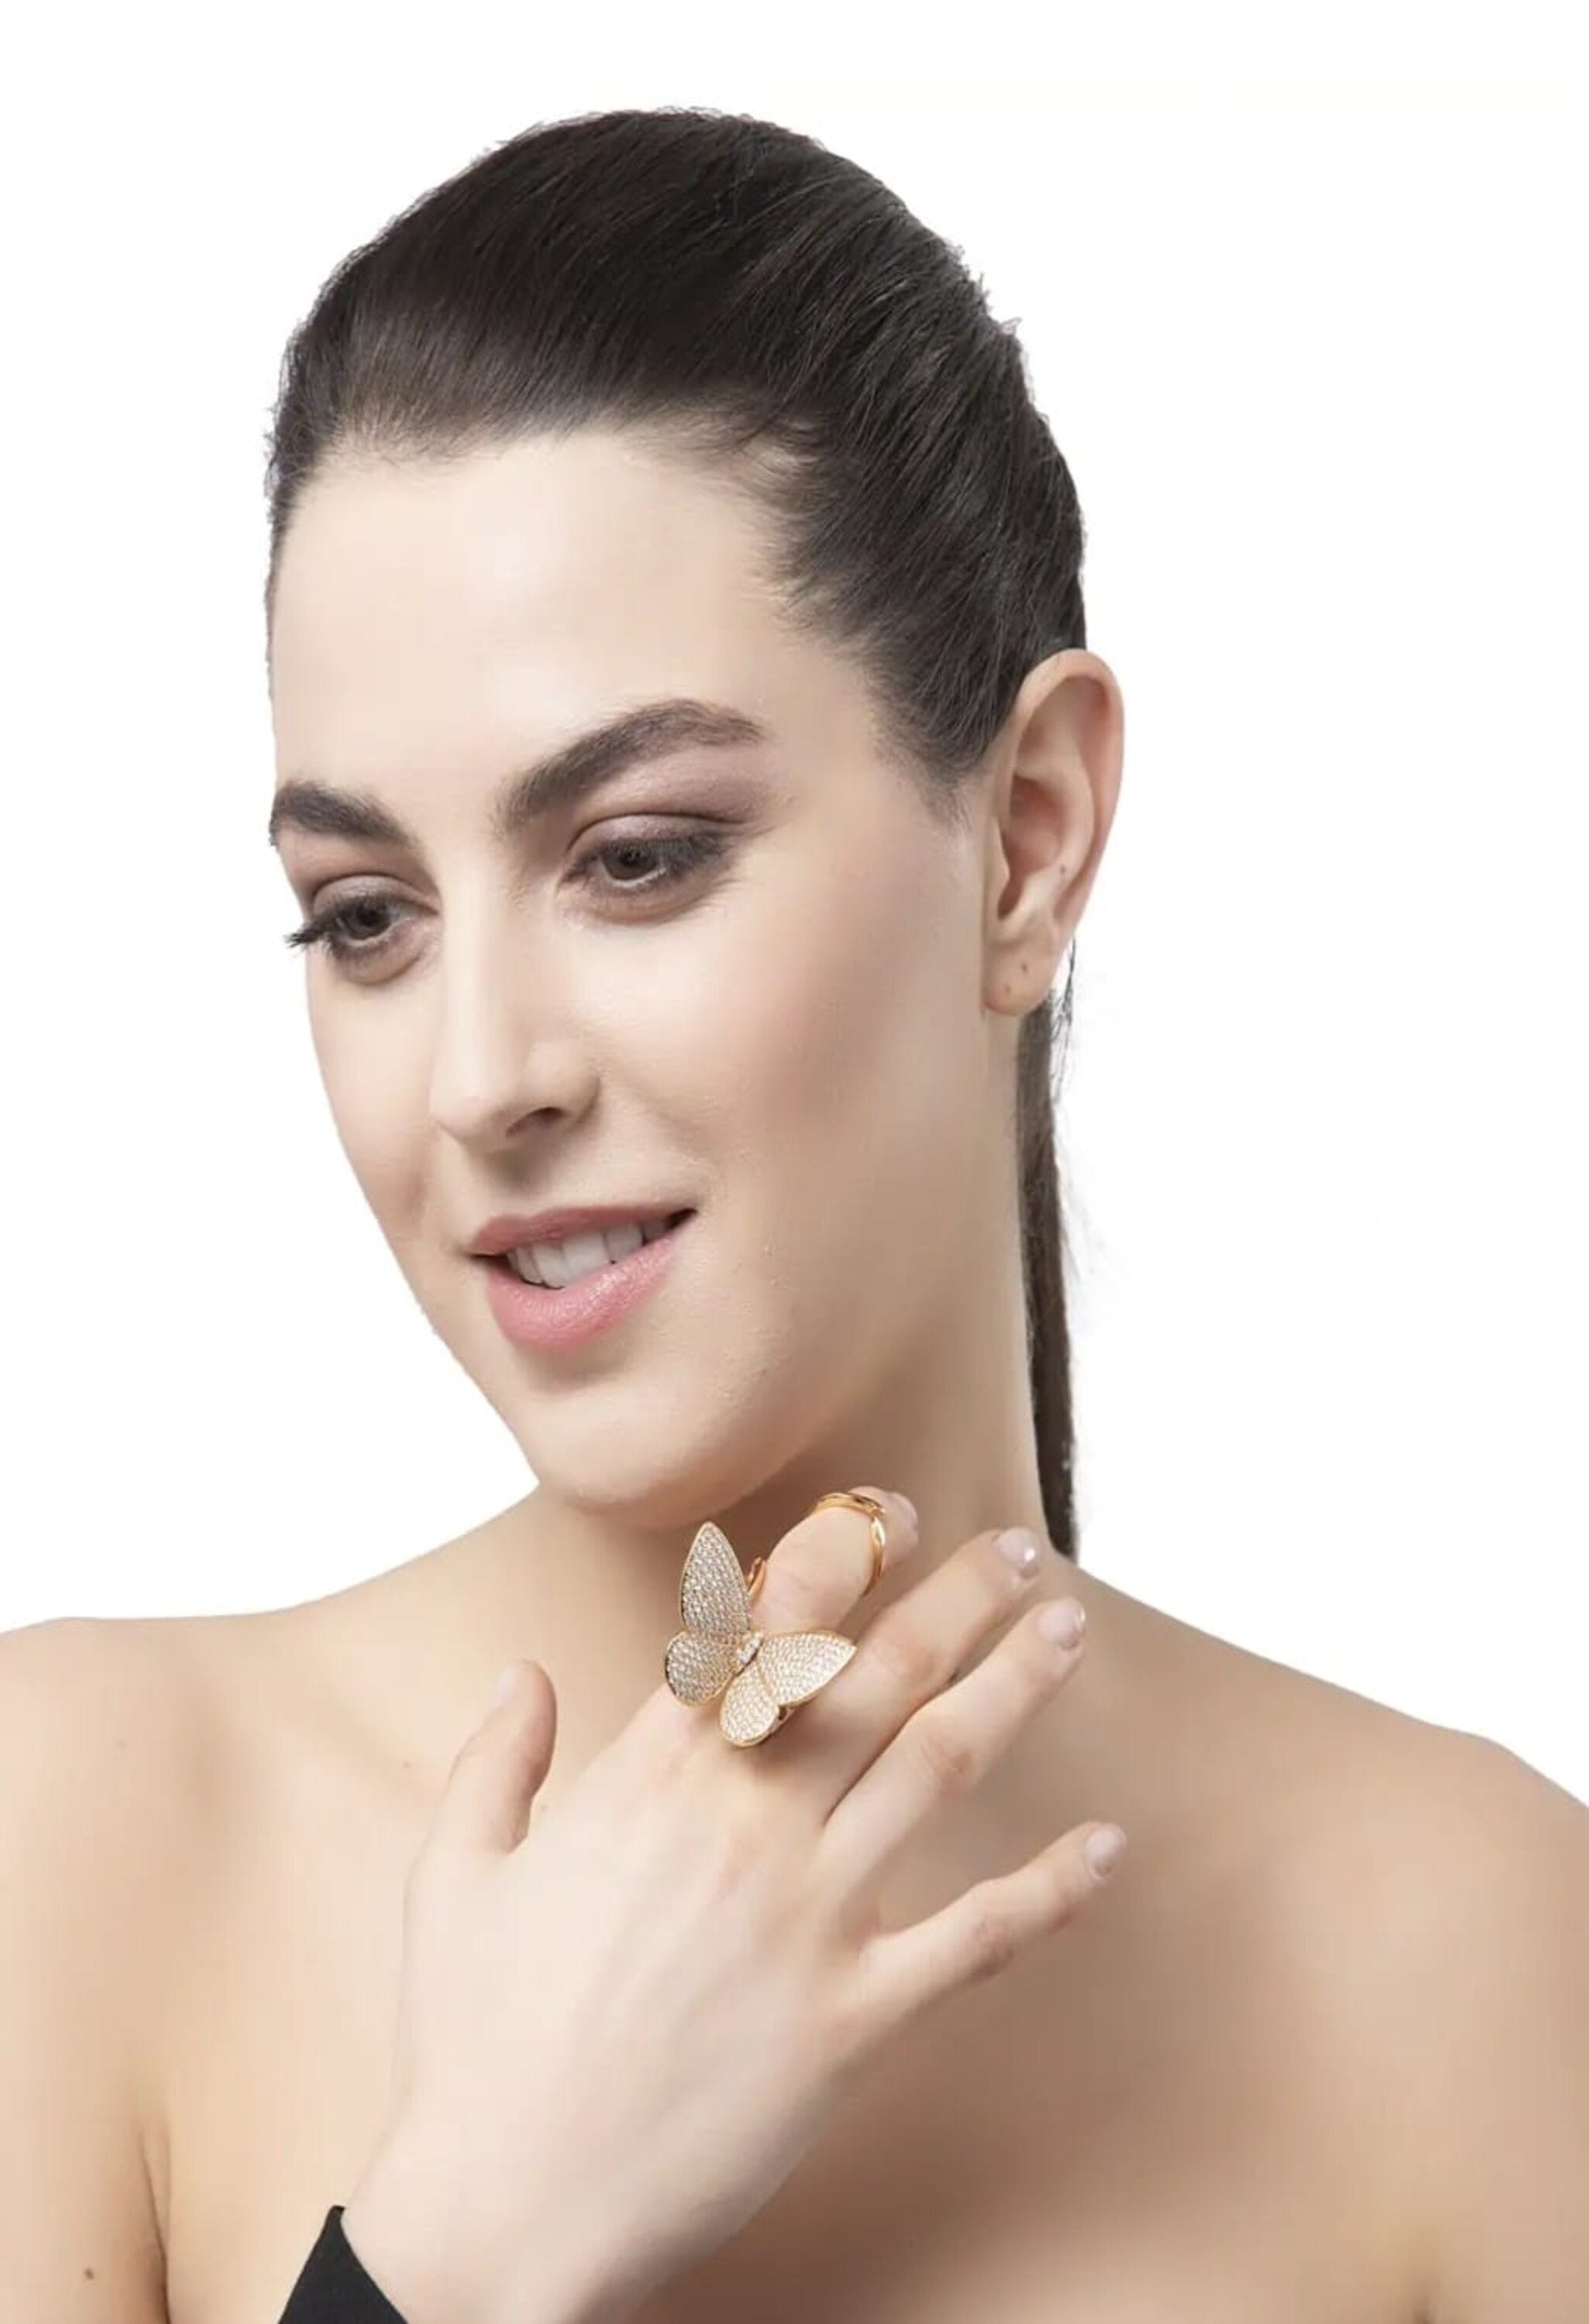 Women's American Diamond Gold-Plated Butterfly Ring - Kamal Johar